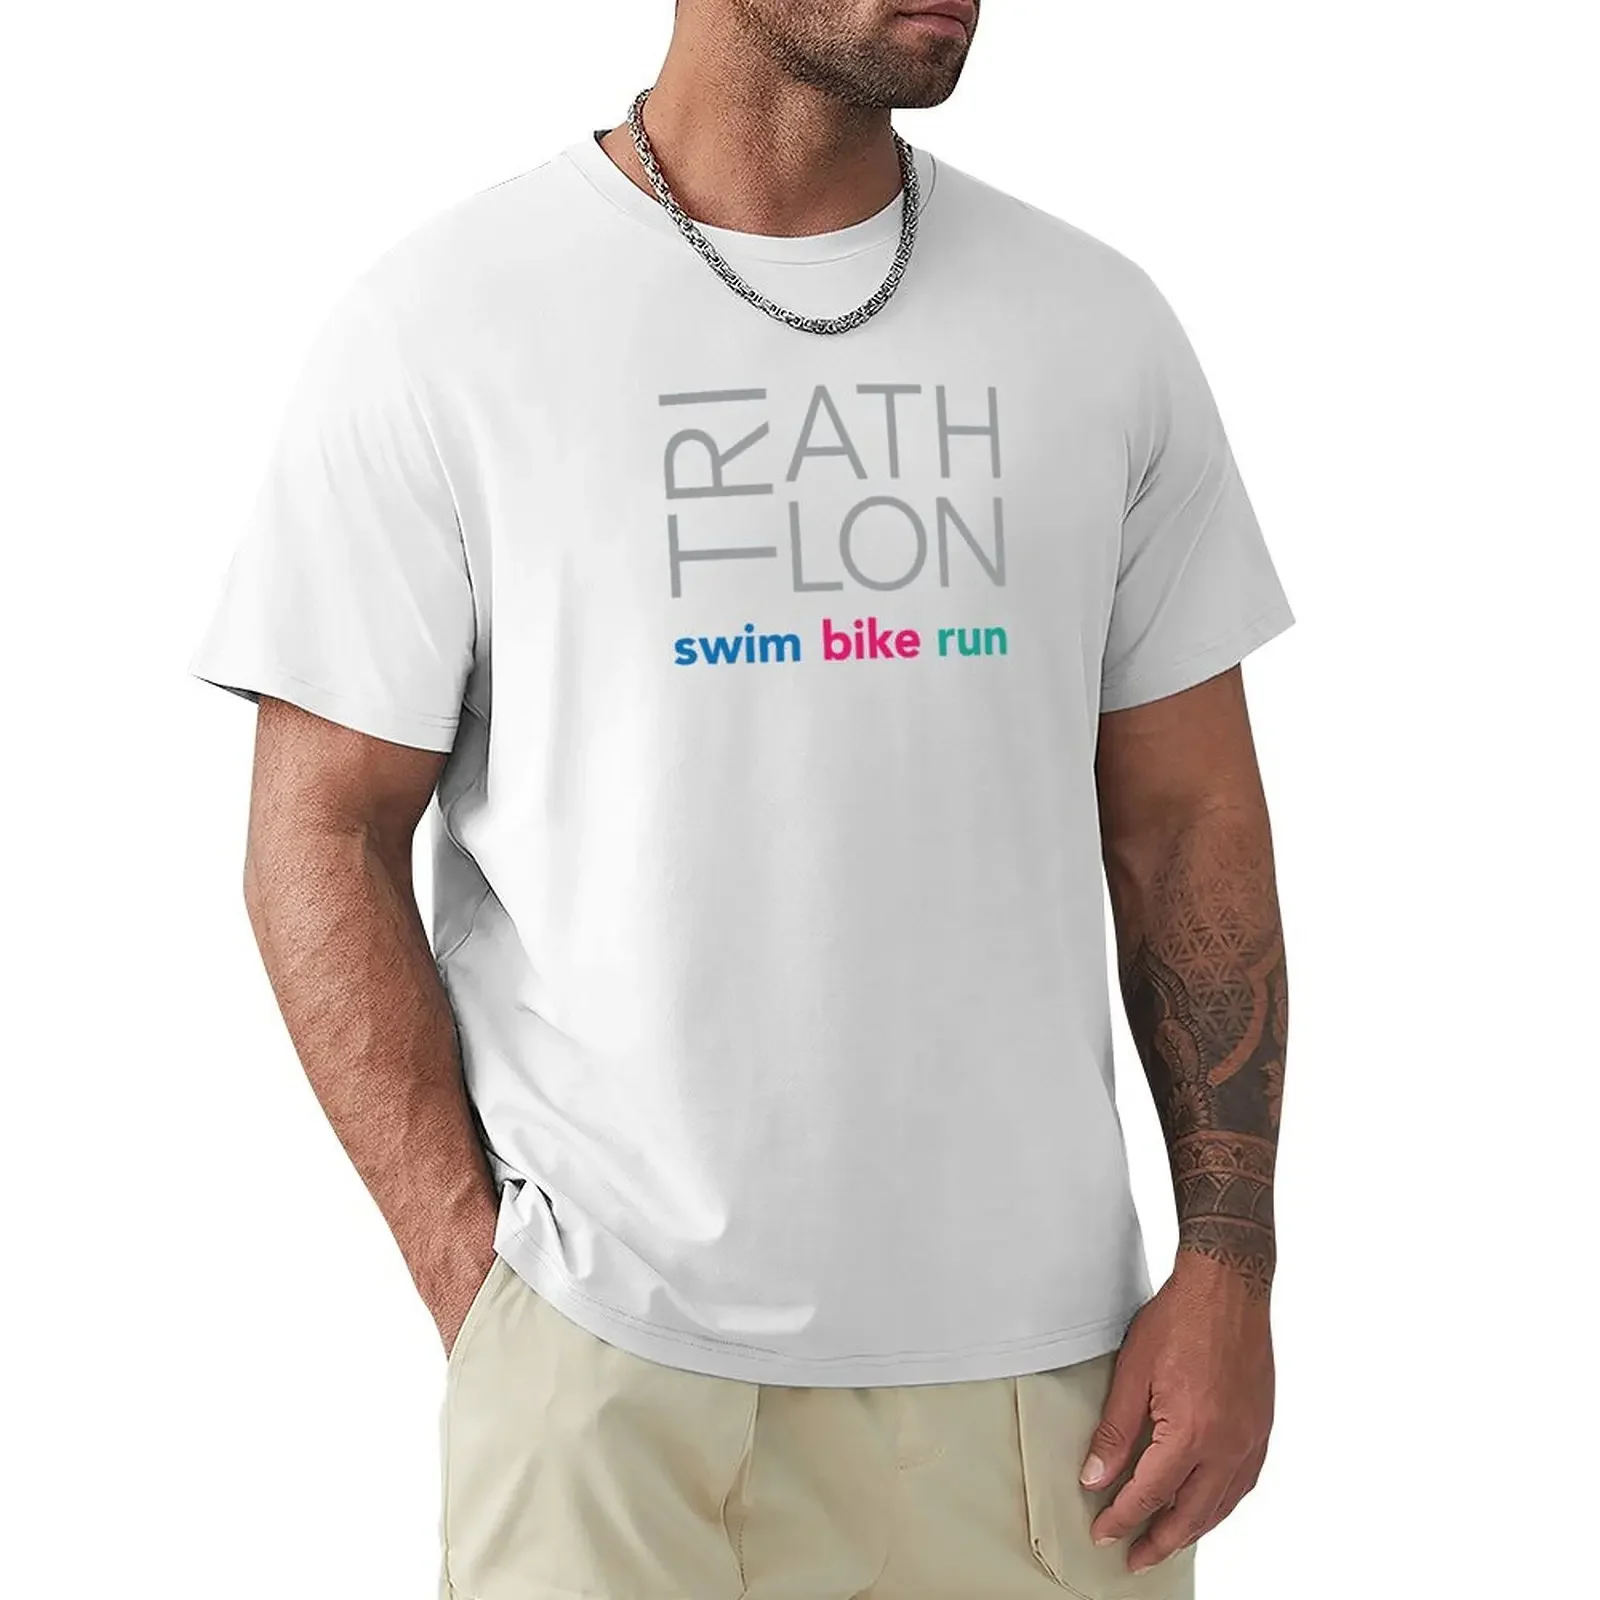 

Triathlon 5 swim bike run colour T-shirt oversizeds oversized vintage clothes mens workout shirts